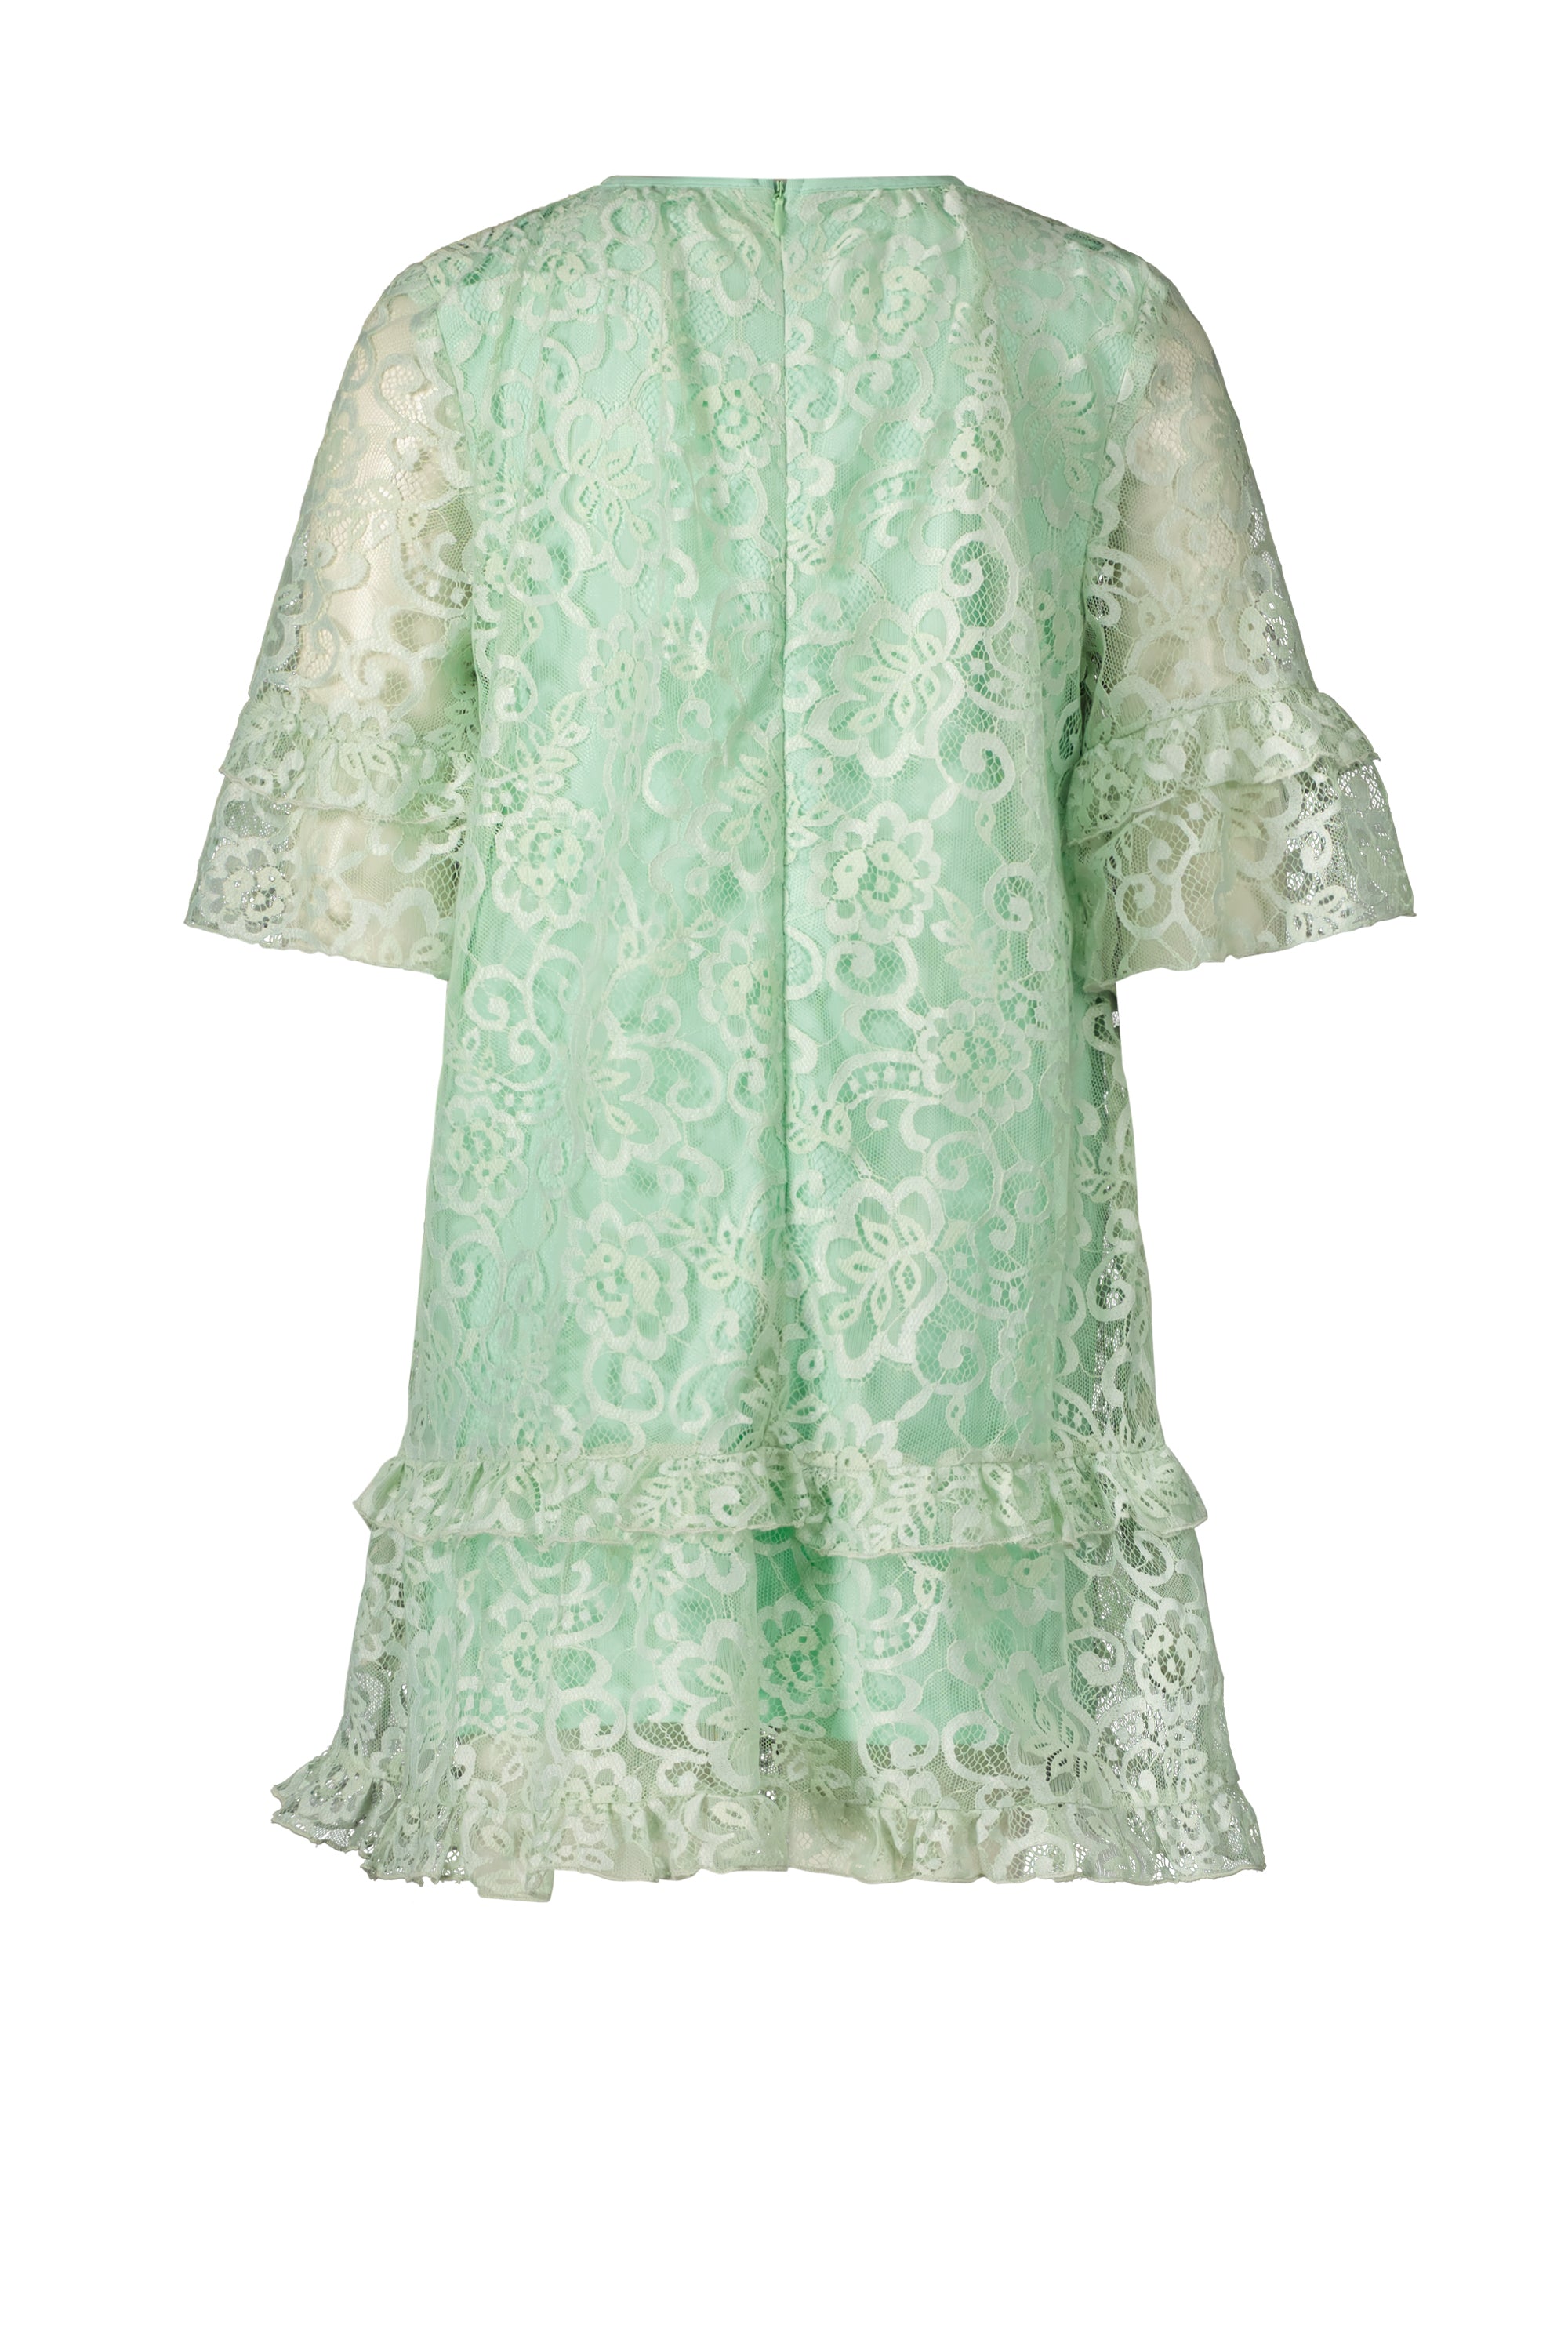 SAMBER spring lace dress